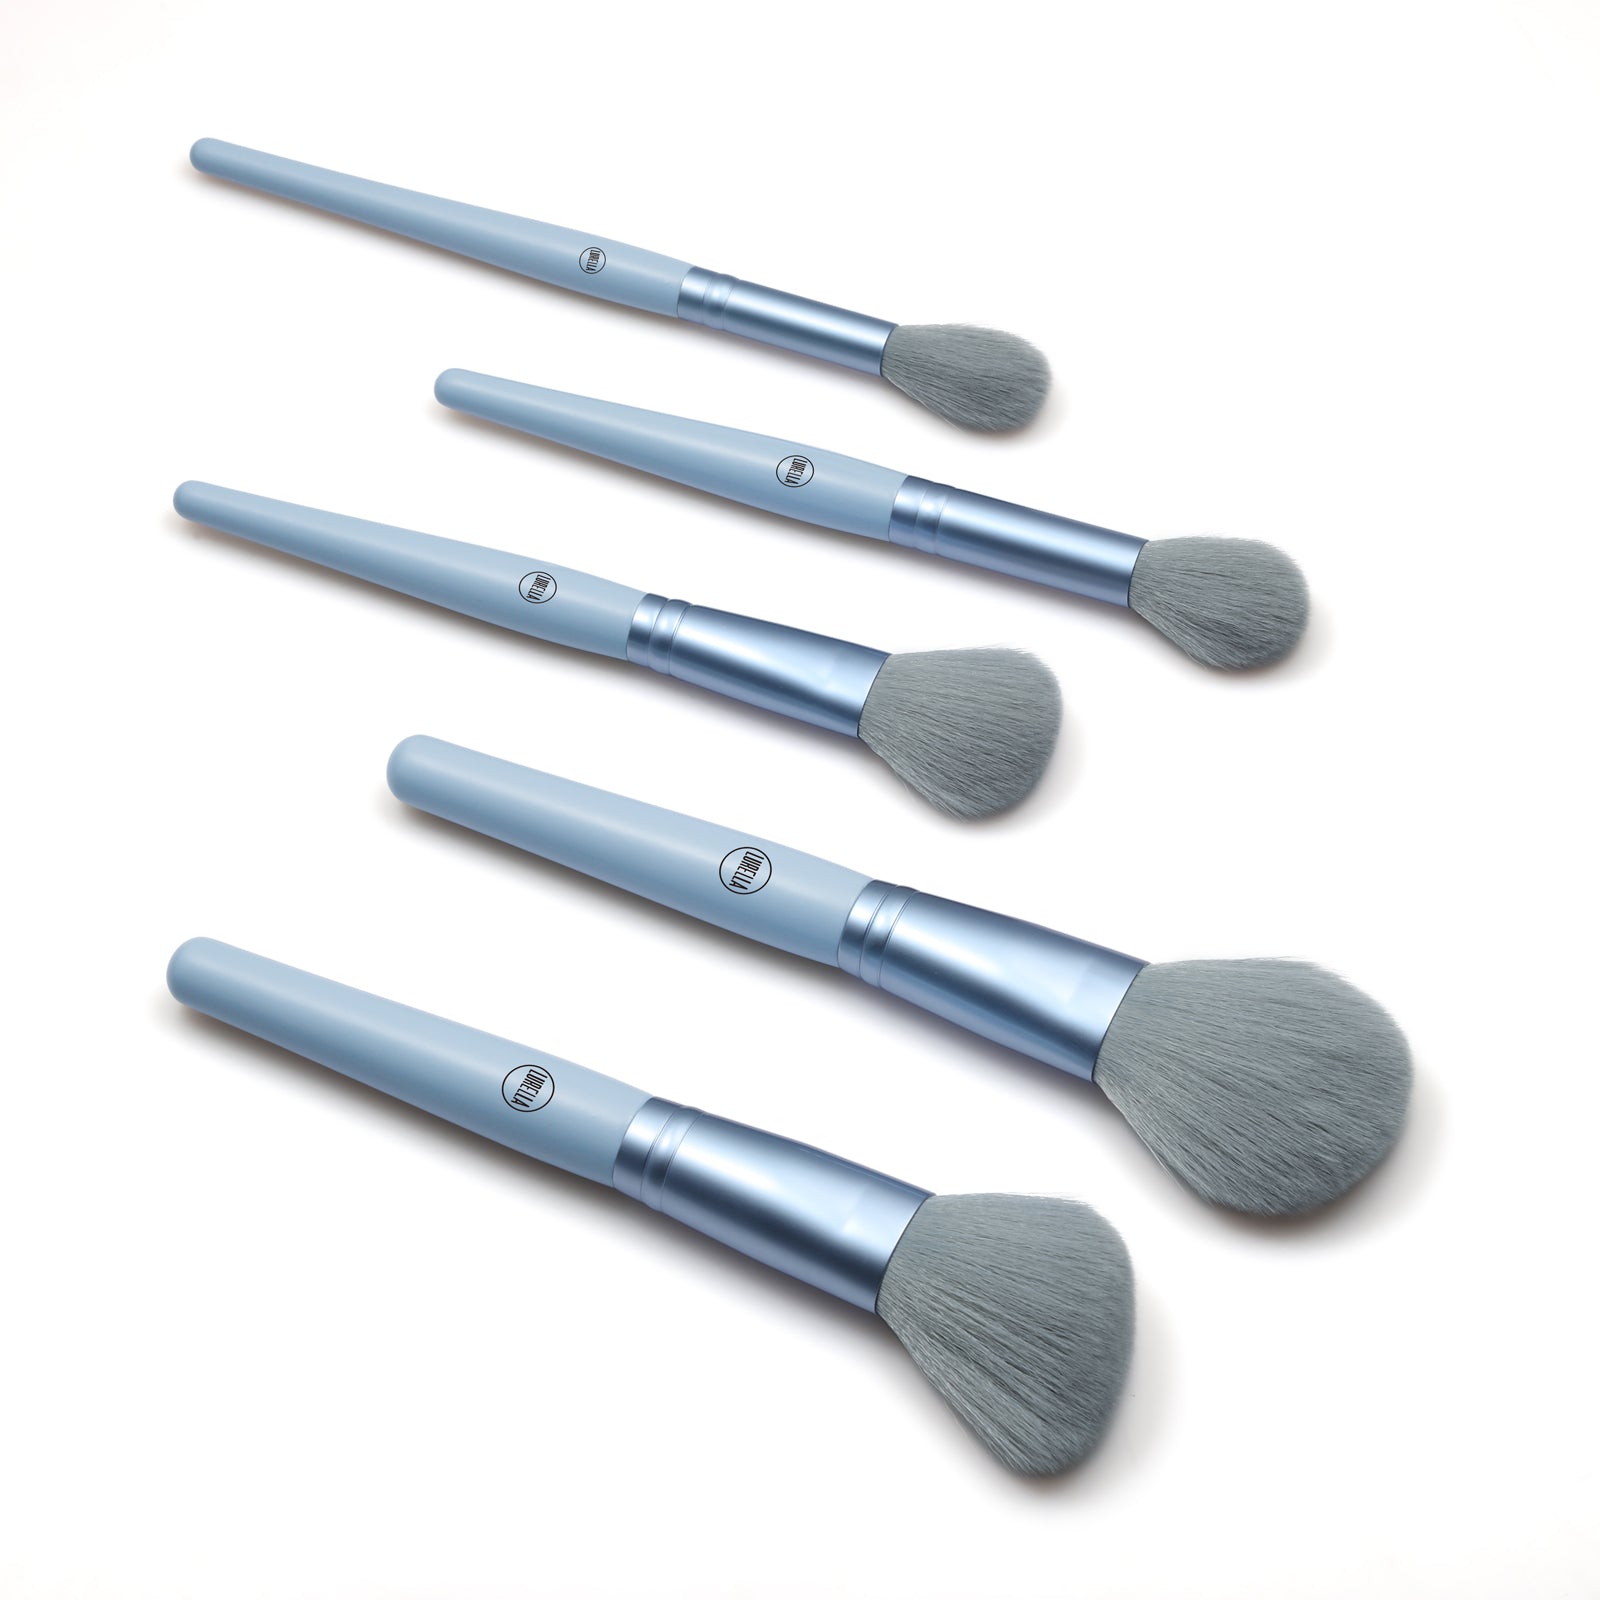 Makeup Brush Holder - Clear Crystal Brush Holder - Lurella Cosmetics